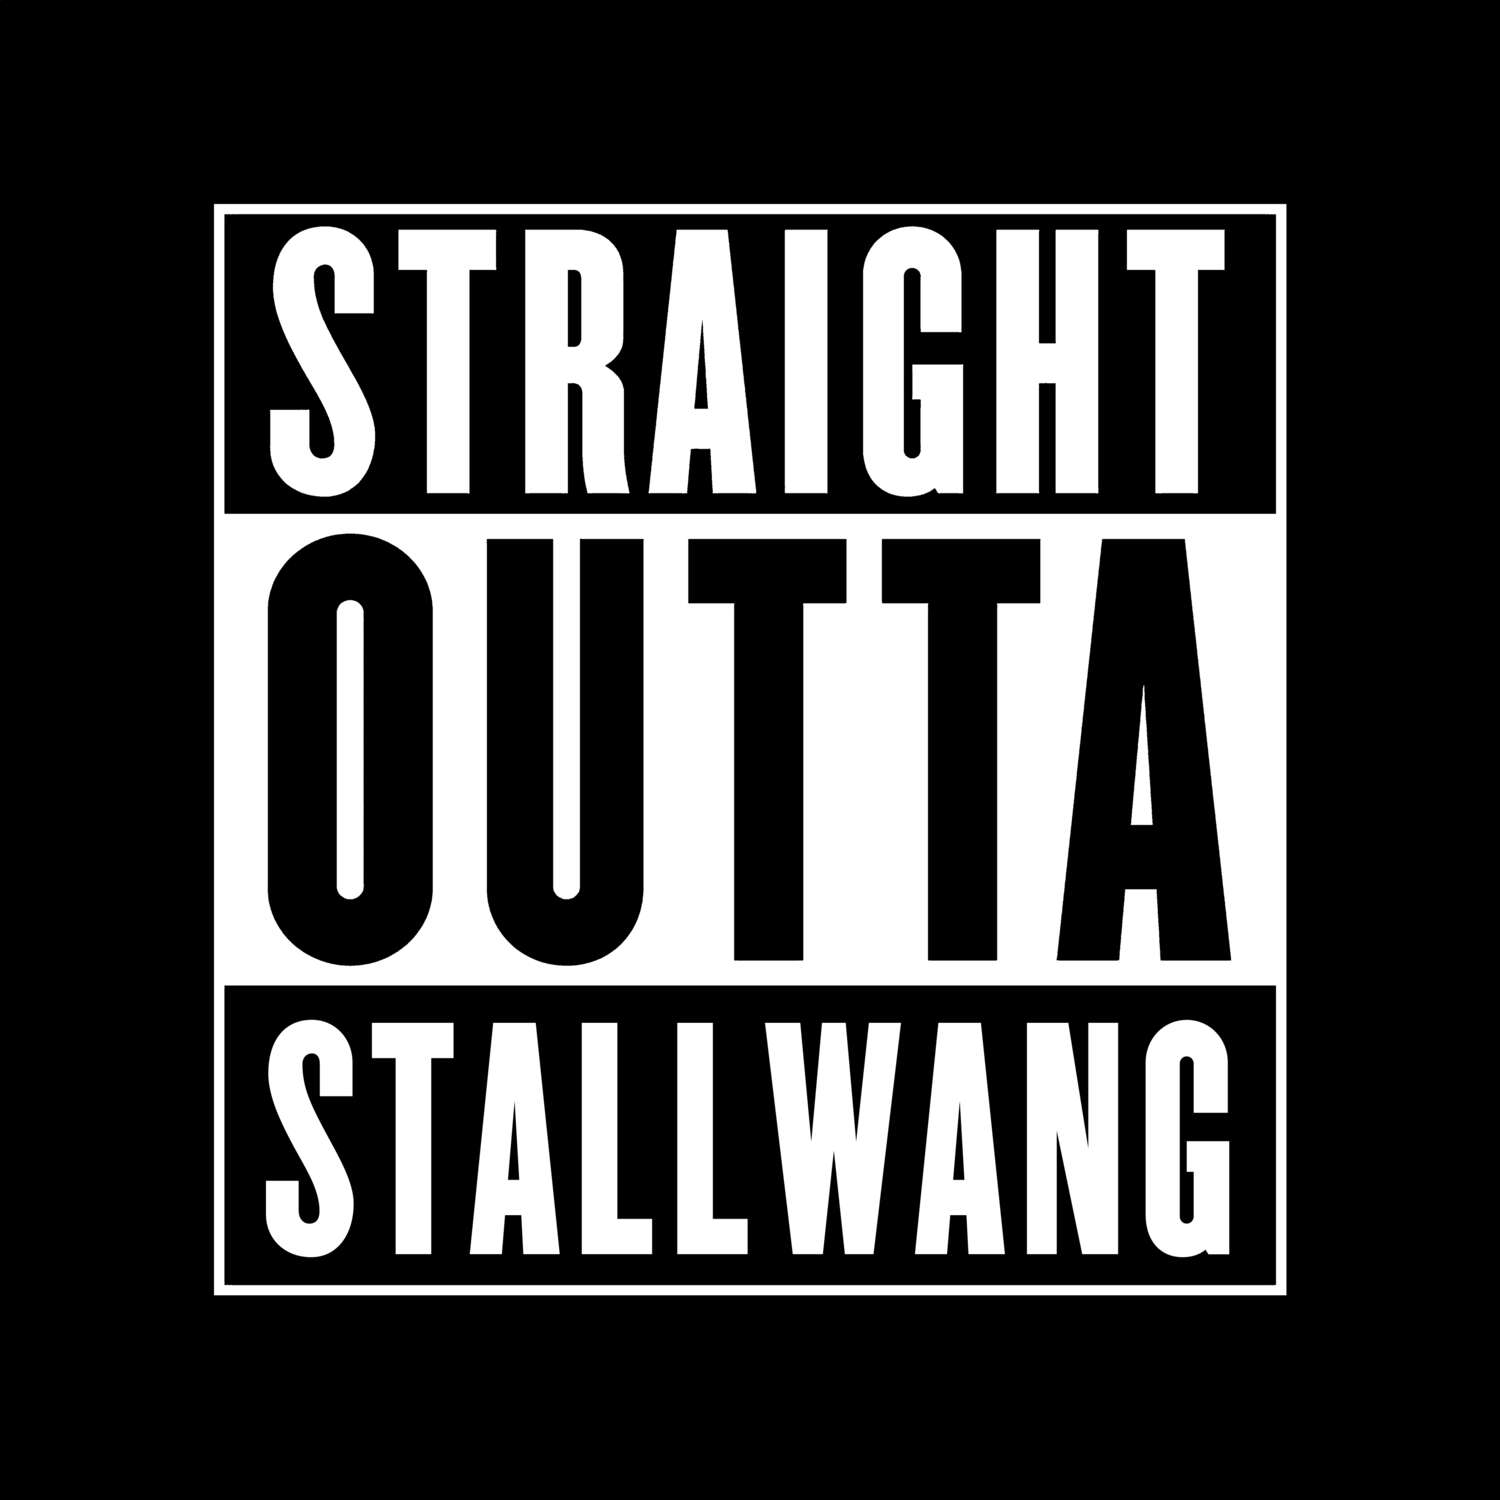 Stallwang T-Shirt »Straight Outta«